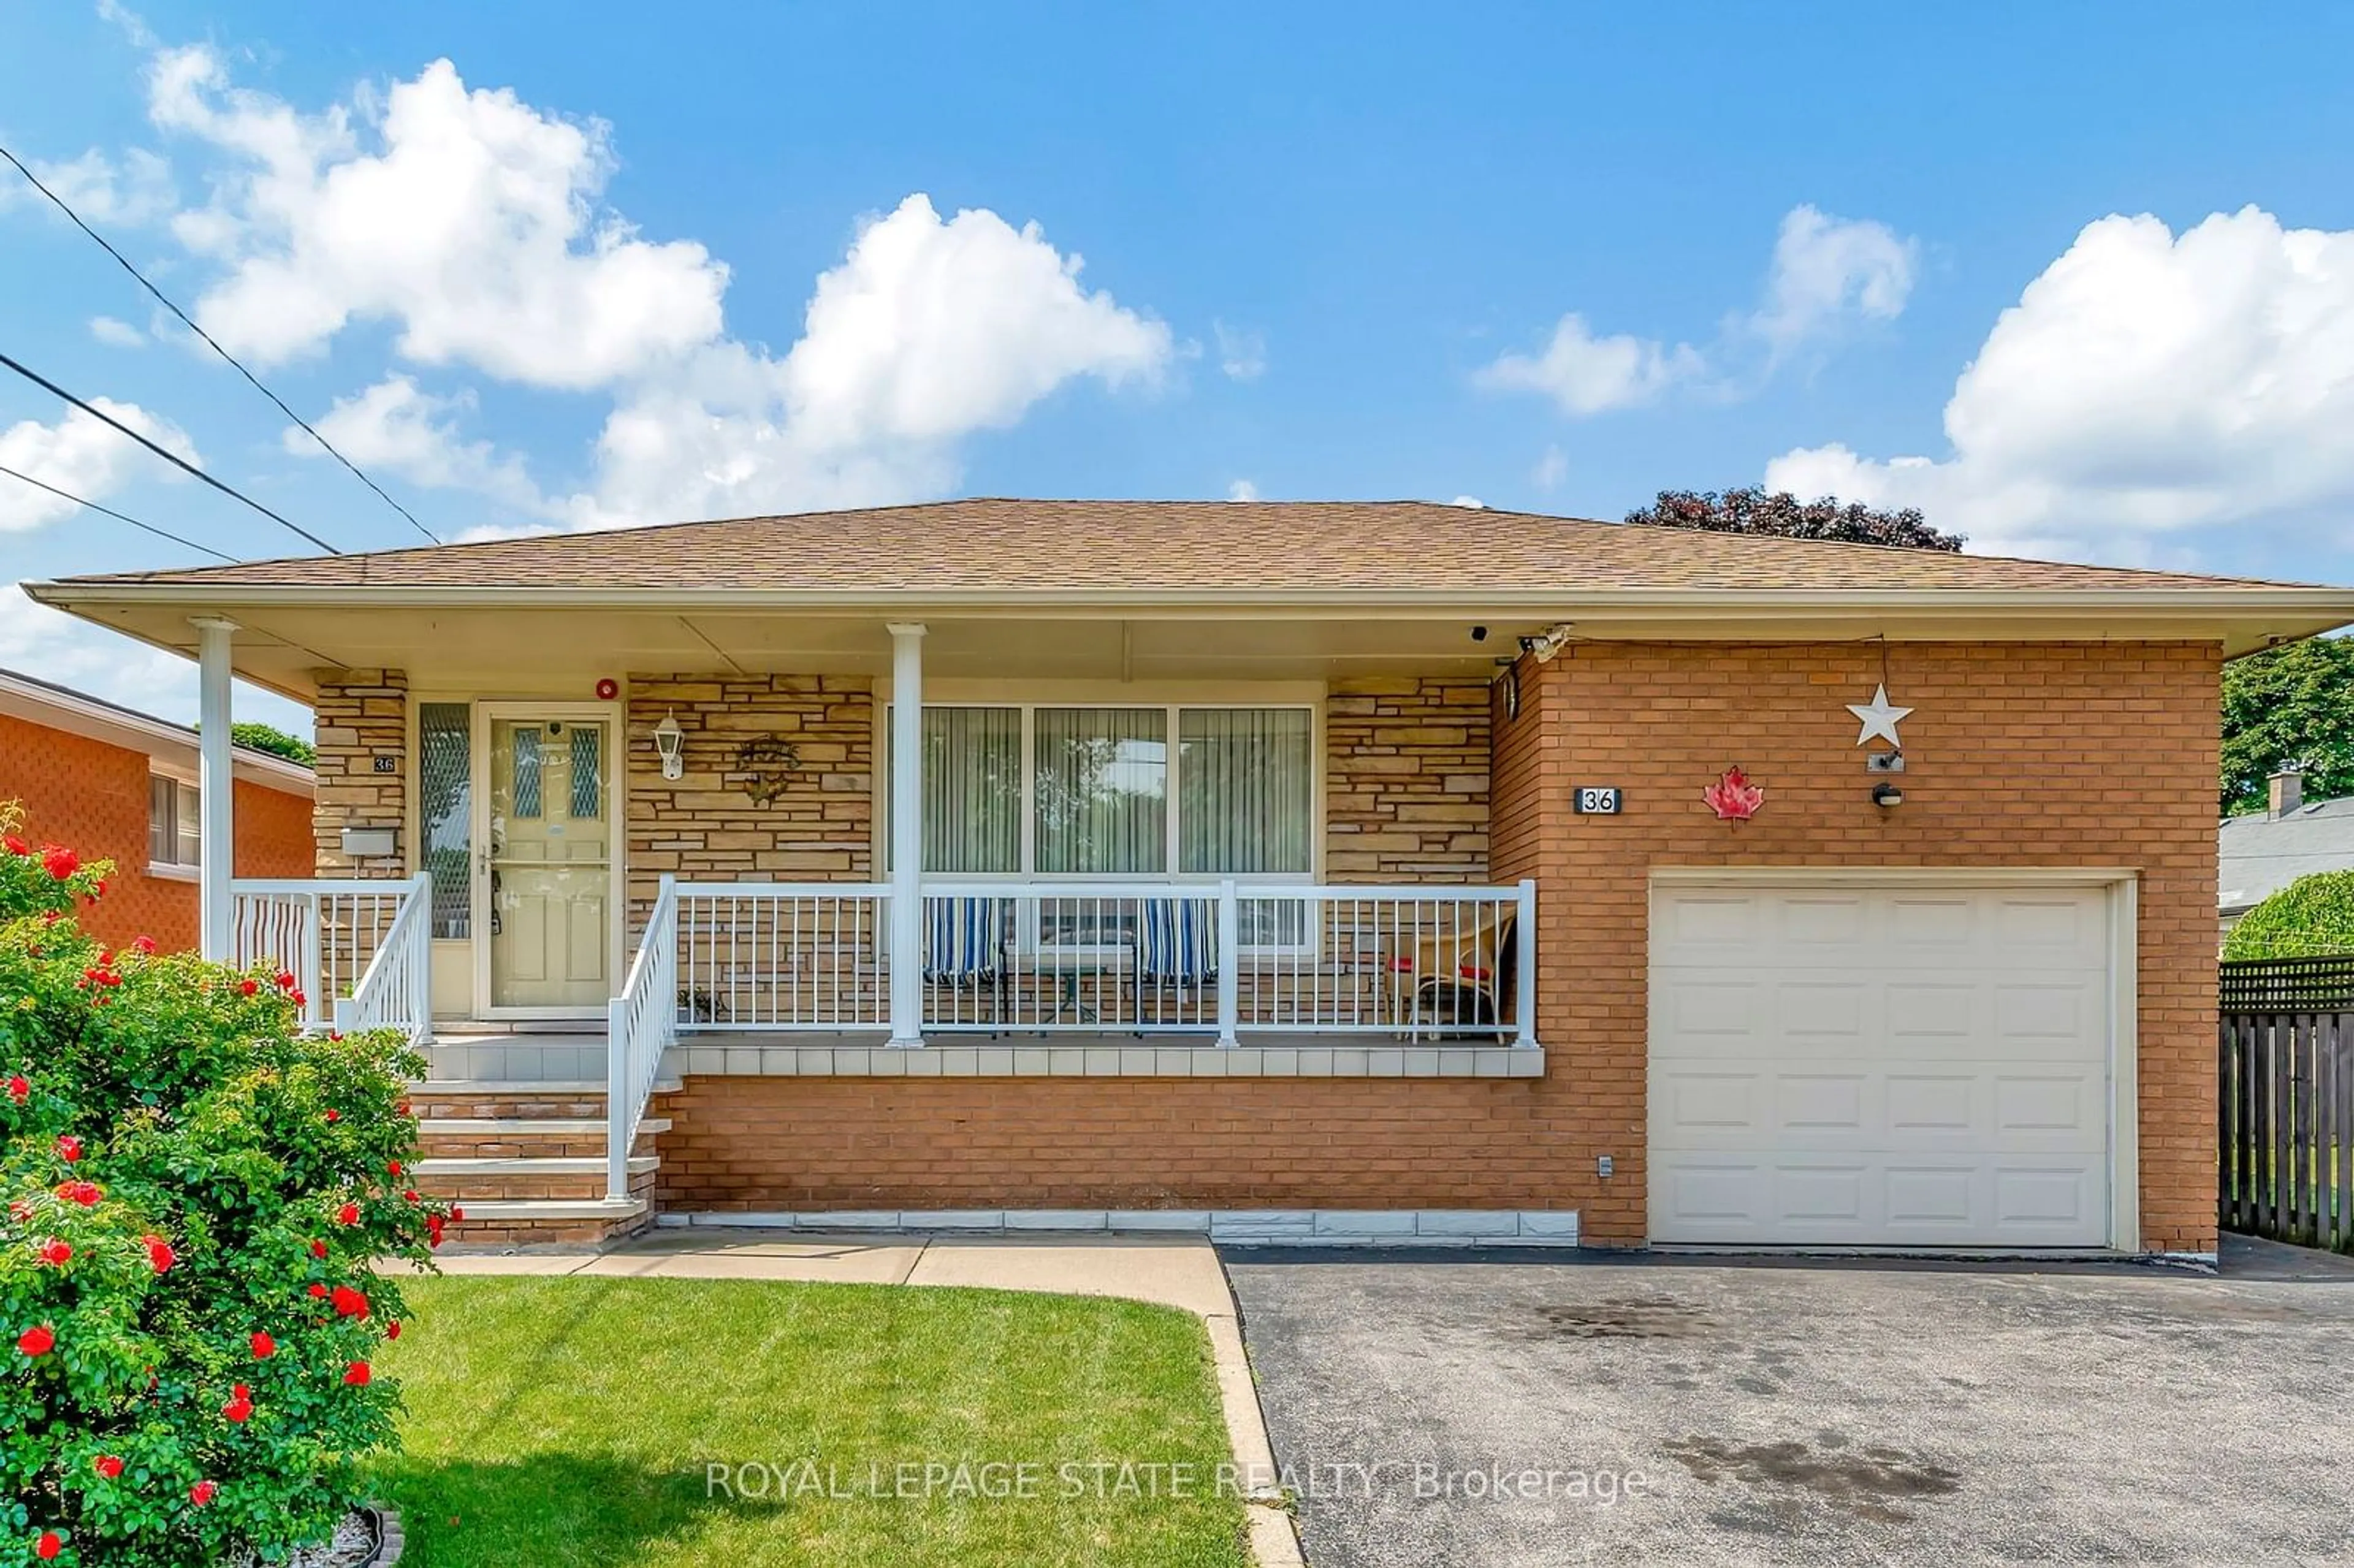 Home with brick exterior material for 36 Dallas Ave, Hamilton Ontario L8V 2E5